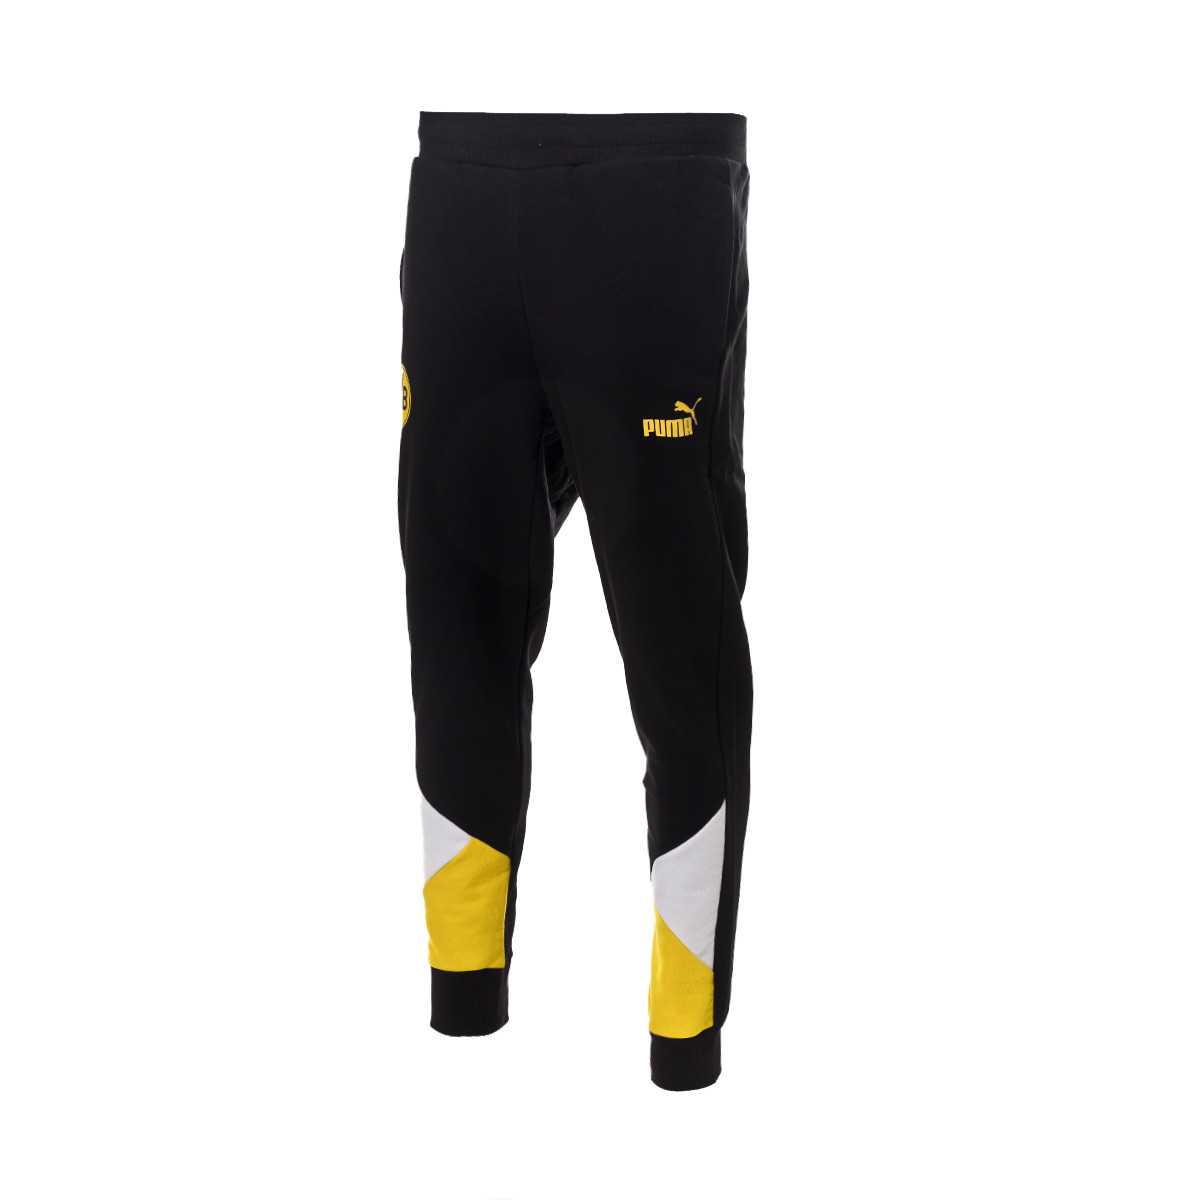 Pantaloni lunghi Puma Borussia Dortmund FtblCulture Track Pants 2021-2022